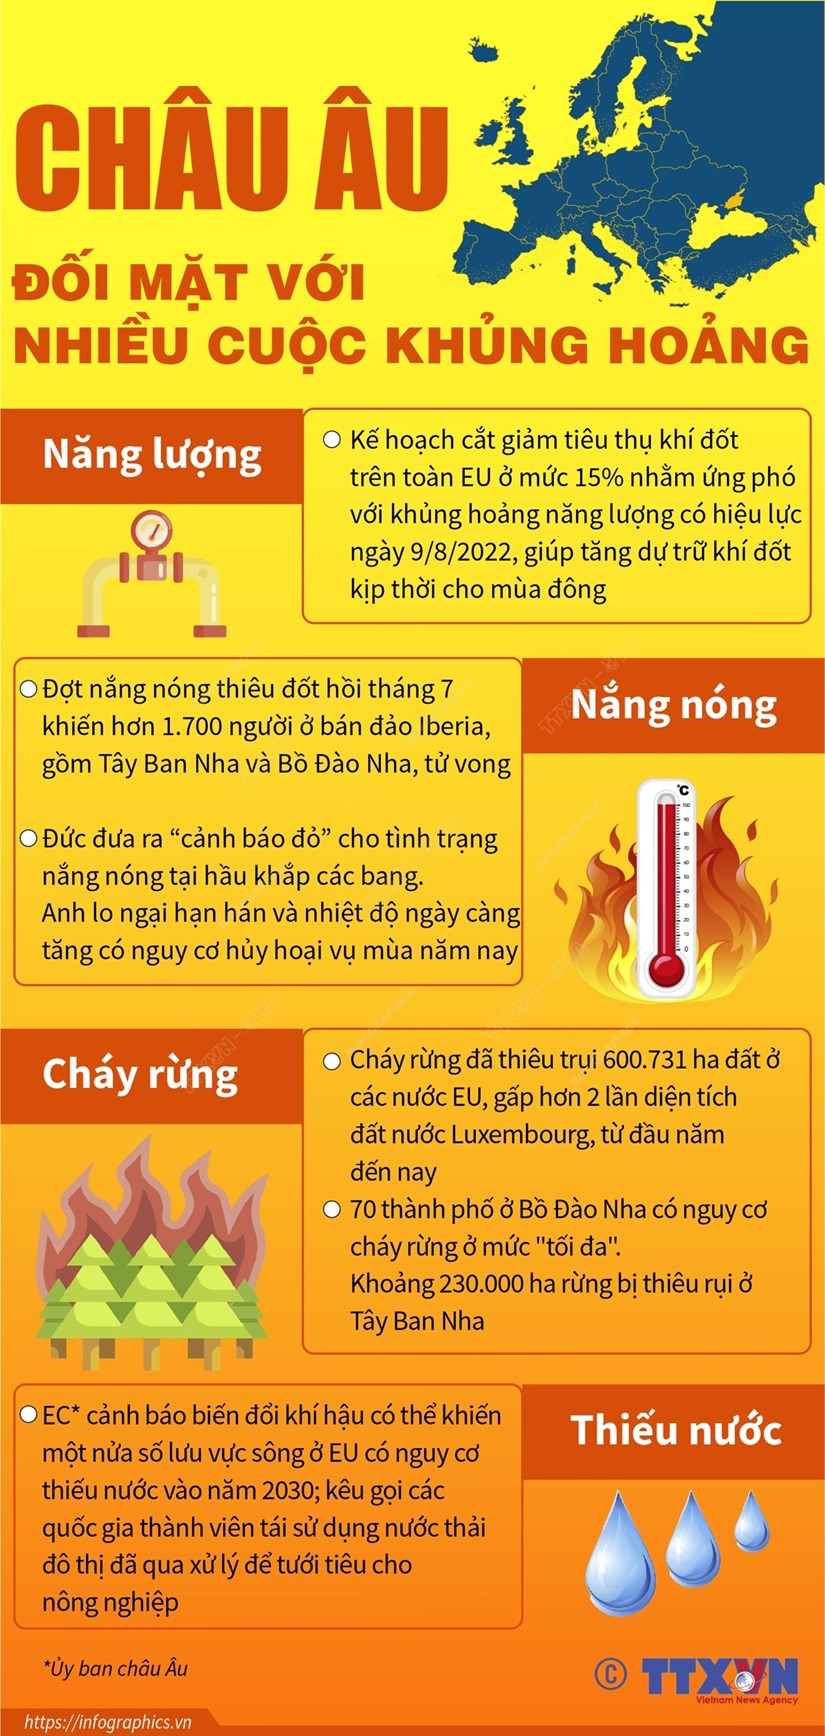 [Infographics] Chau Au doi mat voi nhieu cuoc khung hoang hinh anh 1